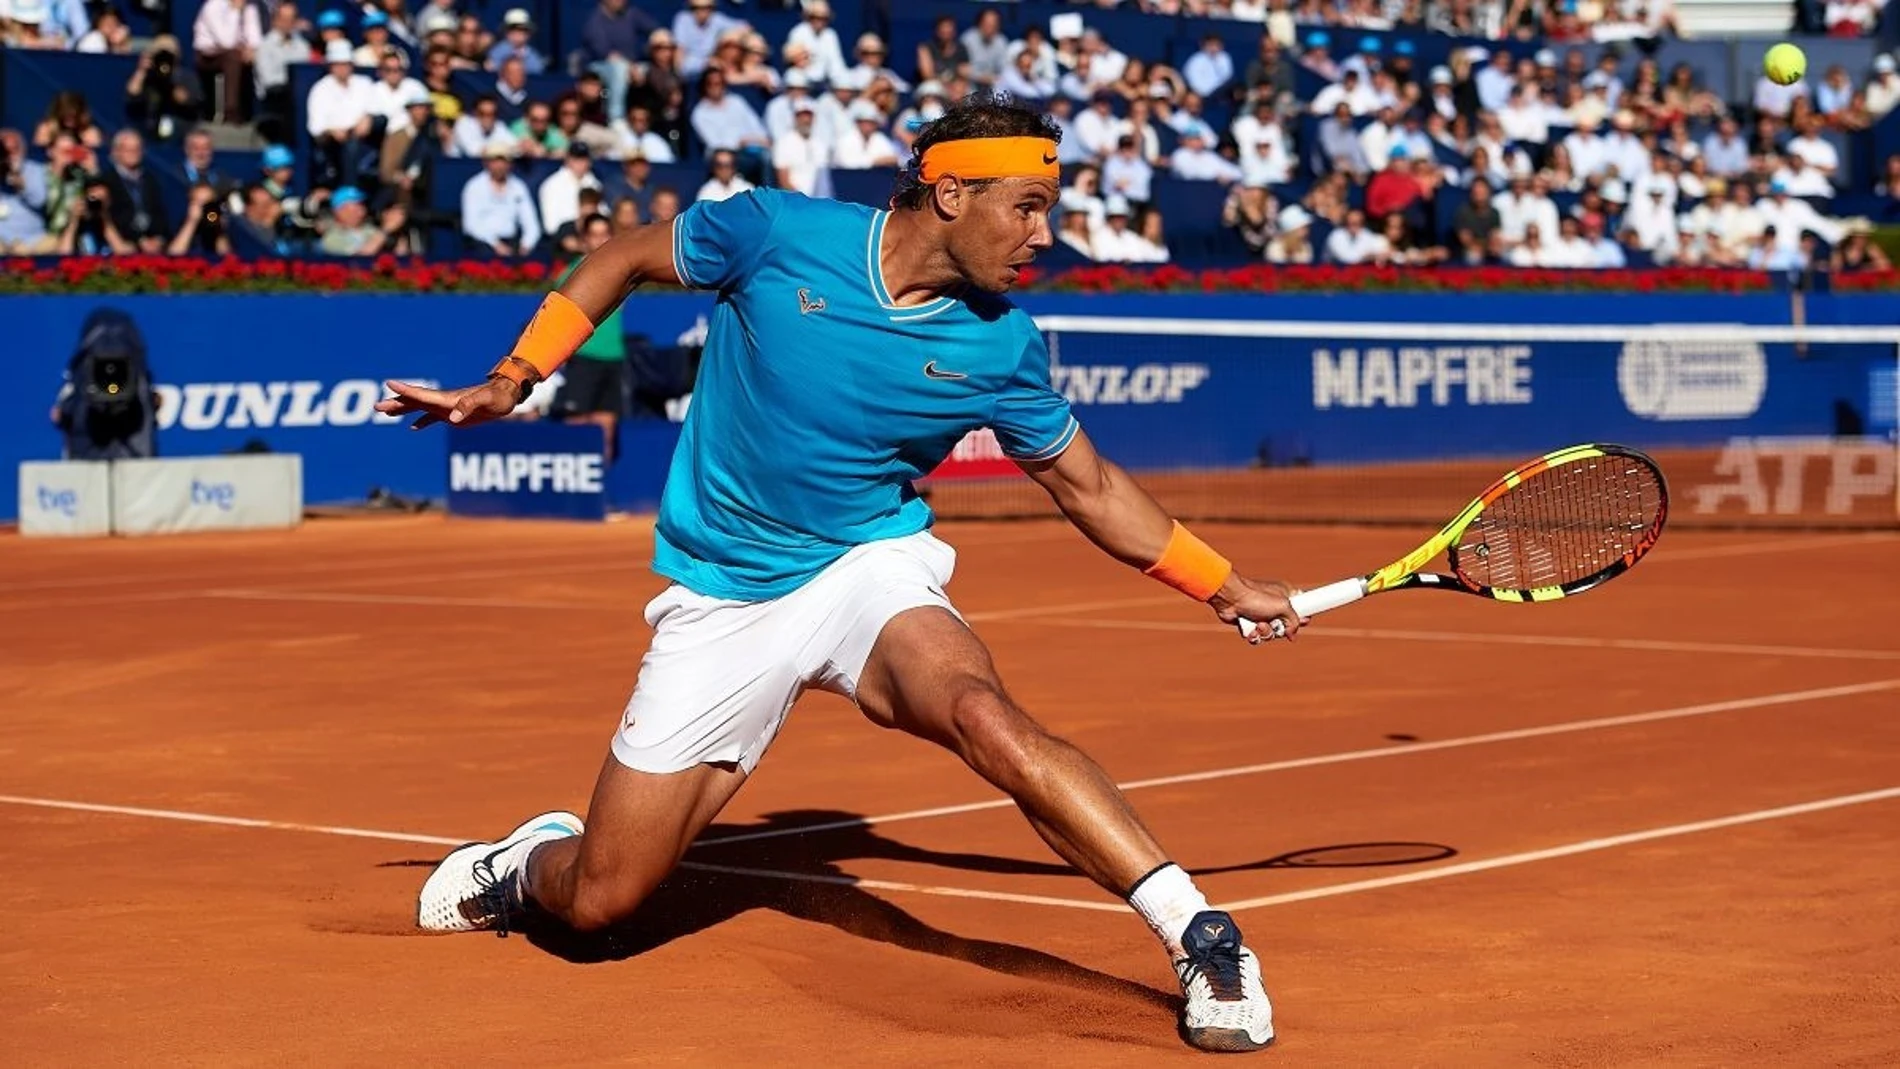 Tenis.- Rafa Nadal confirma que disputará el Barcelona Open Banc Sabadell 2020